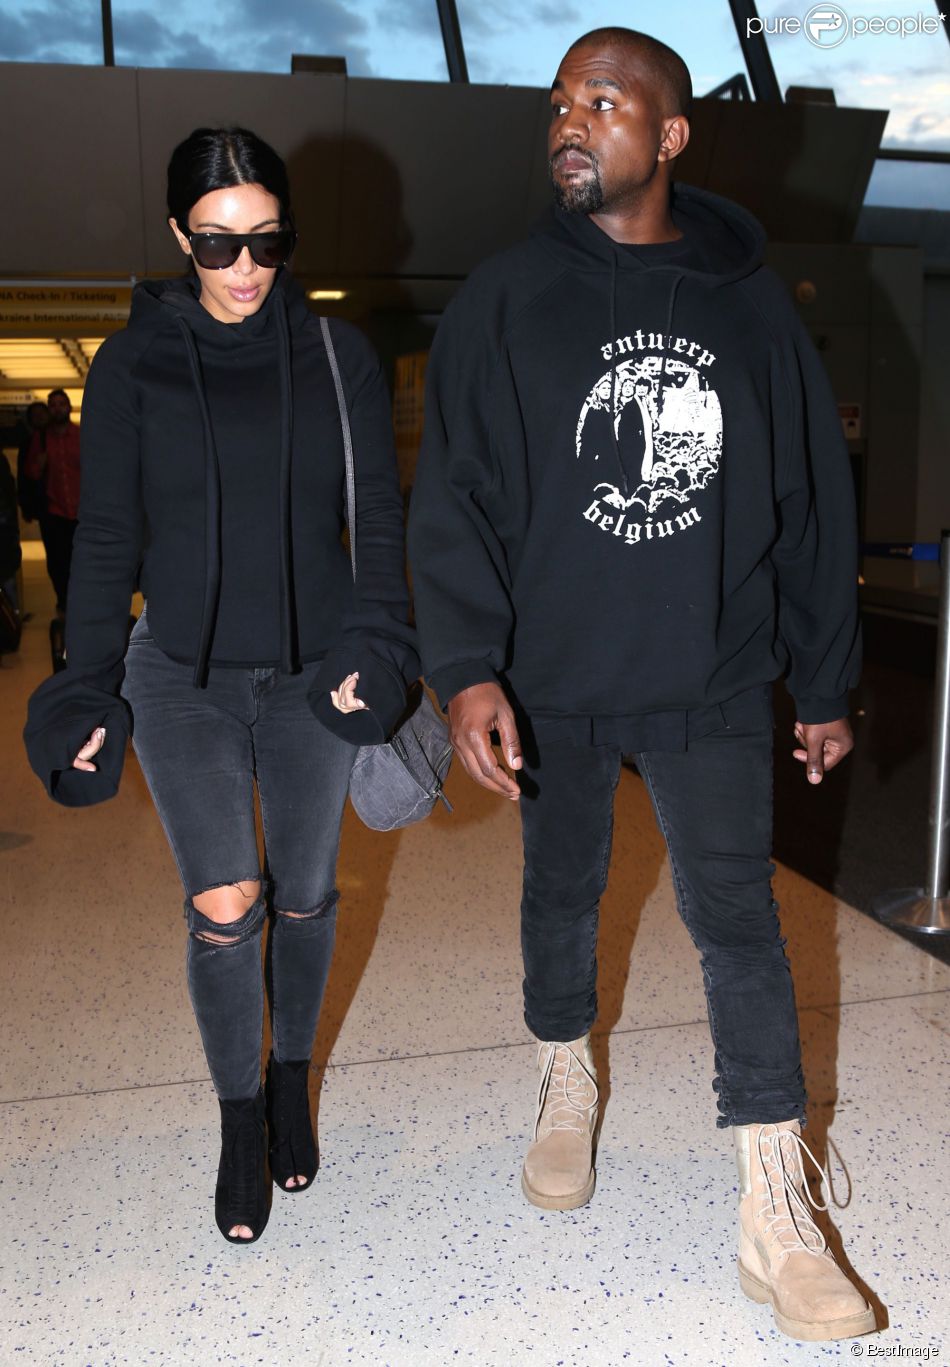  Kim Kardashian et son mari Kanye West arrivent &amp;agrave; l&#039;a&amp;eacute;roport JFK &amp;agrave; New York, le 21 avril 2015.&amp;nbsp;  